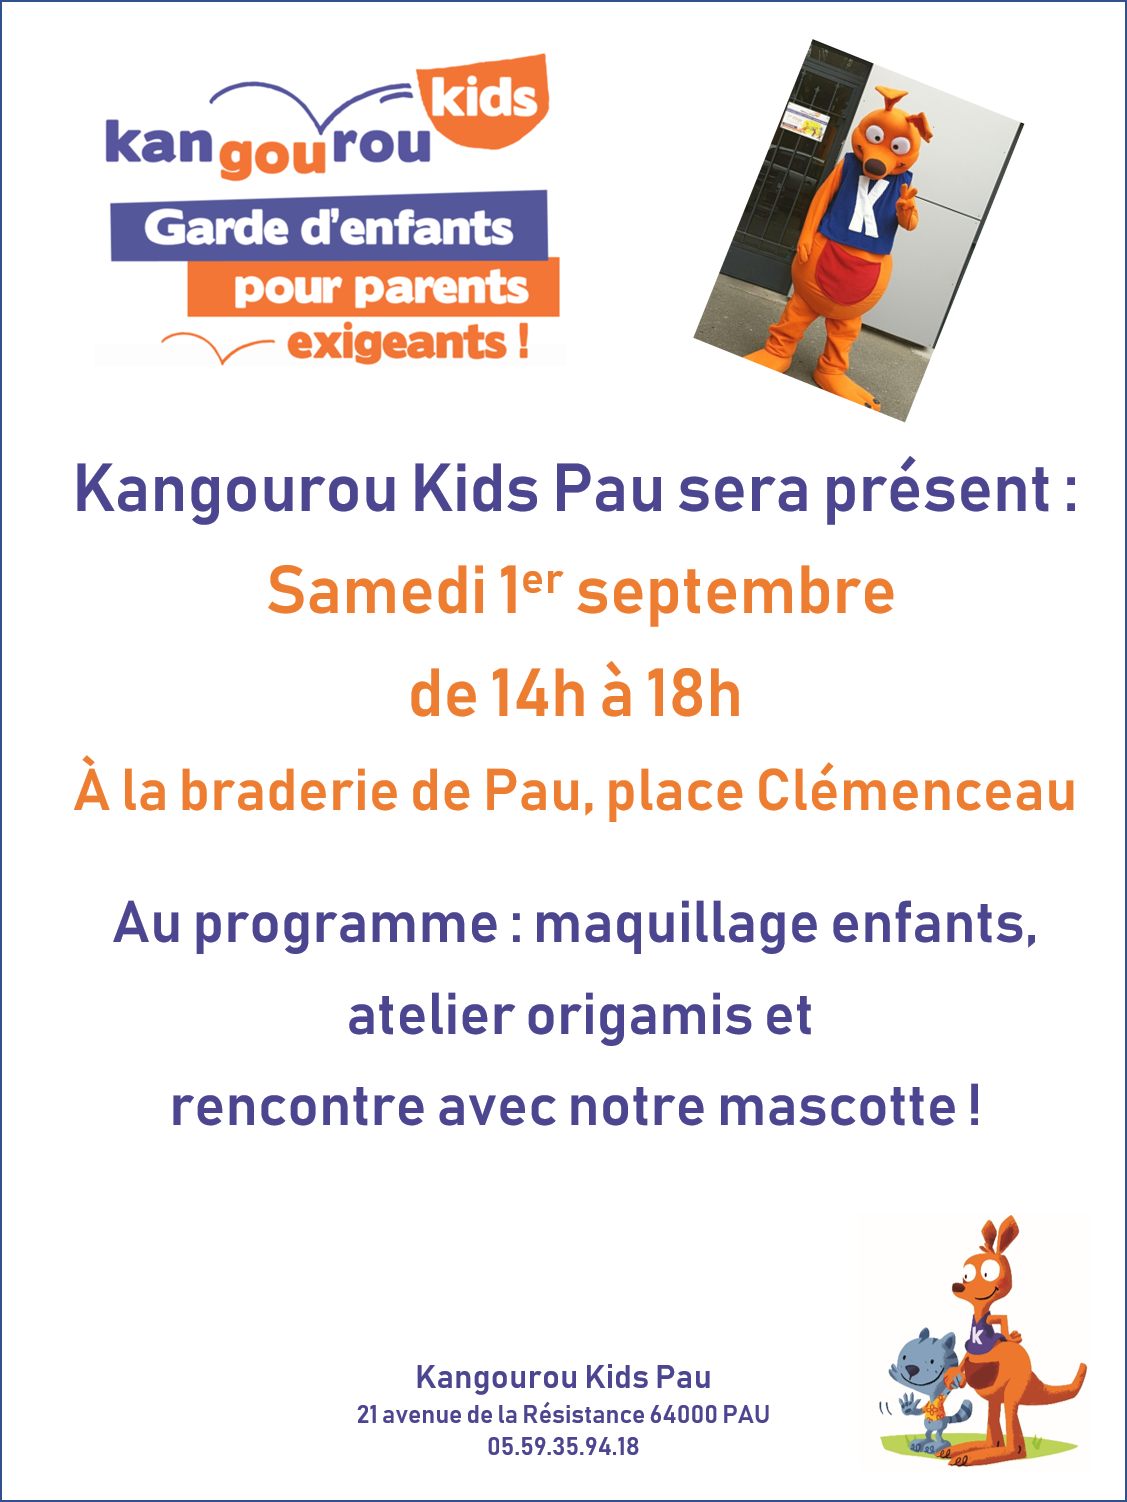 Kangourou Kids sera présent à la Braderie de Pau samedi 1er septembre de 14h à 18h